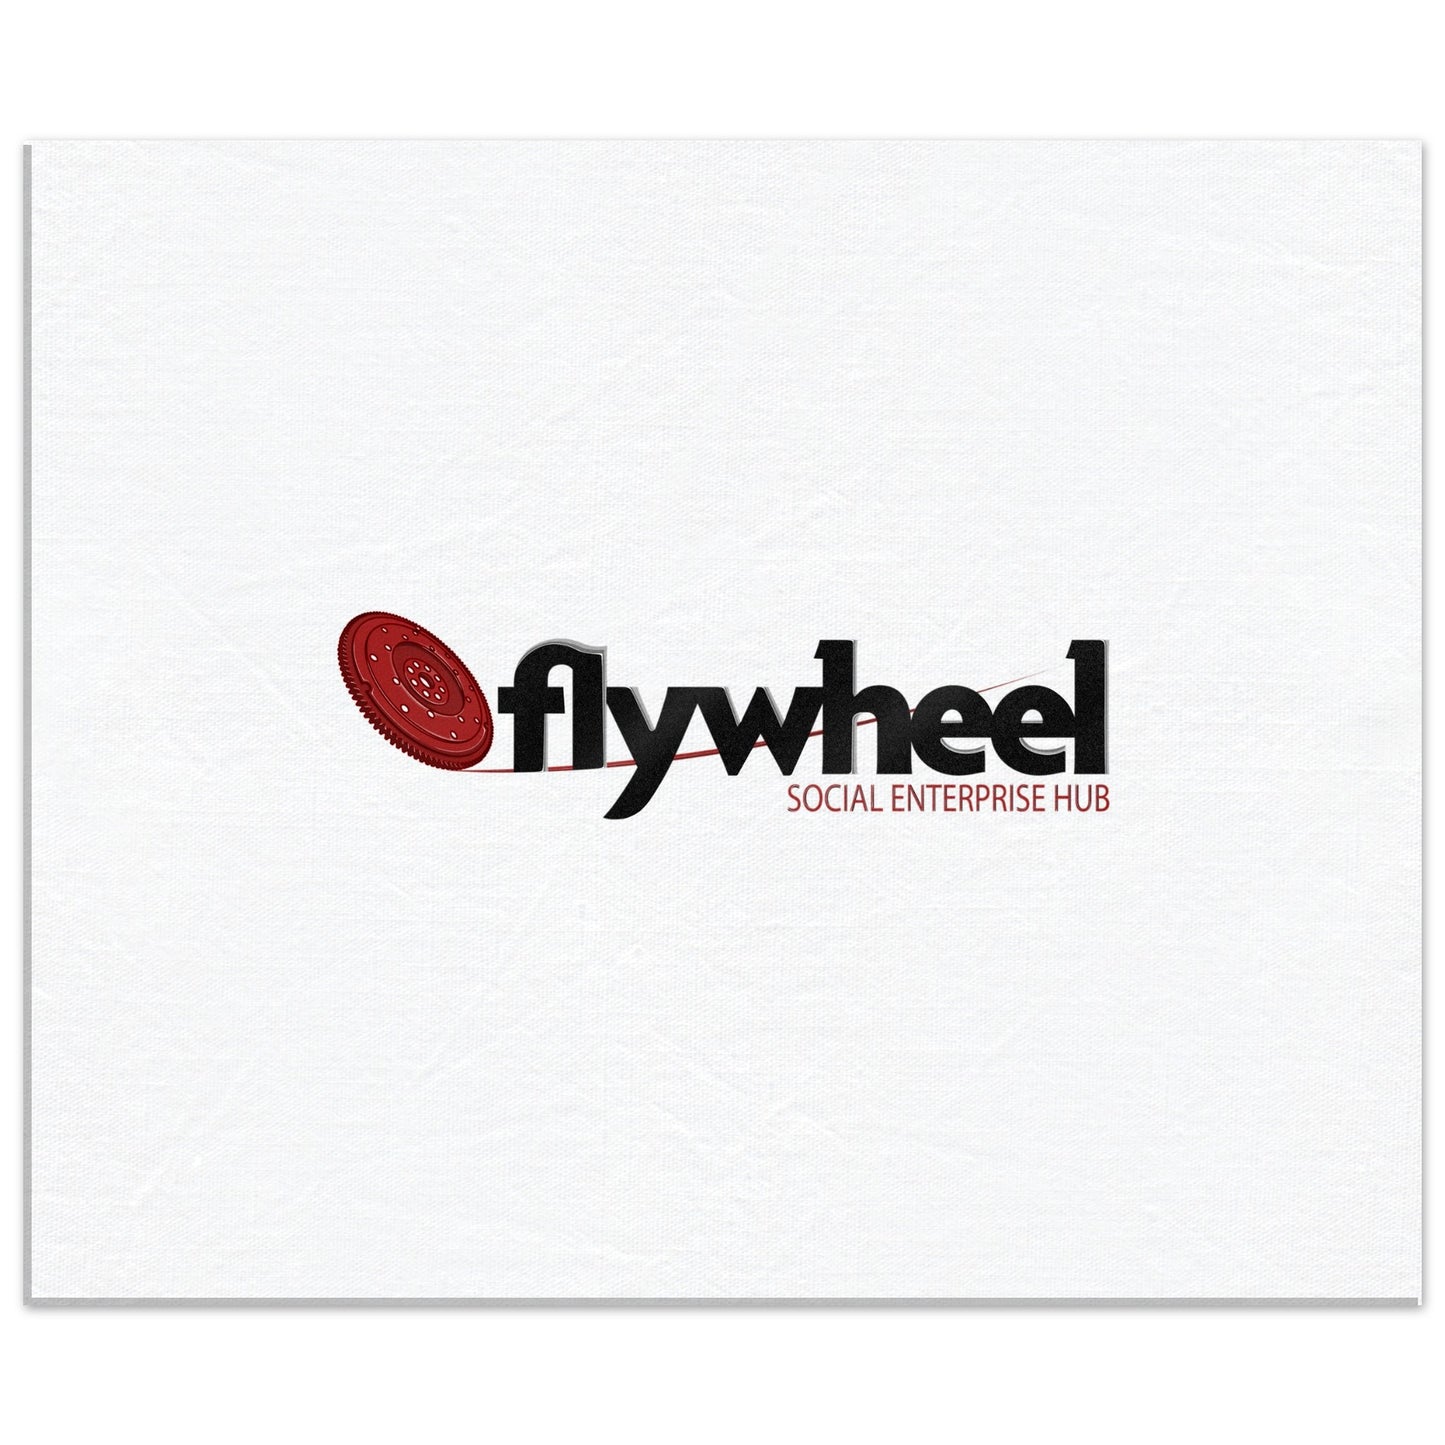 Flywheel Social Enterprise Hub - Canvas